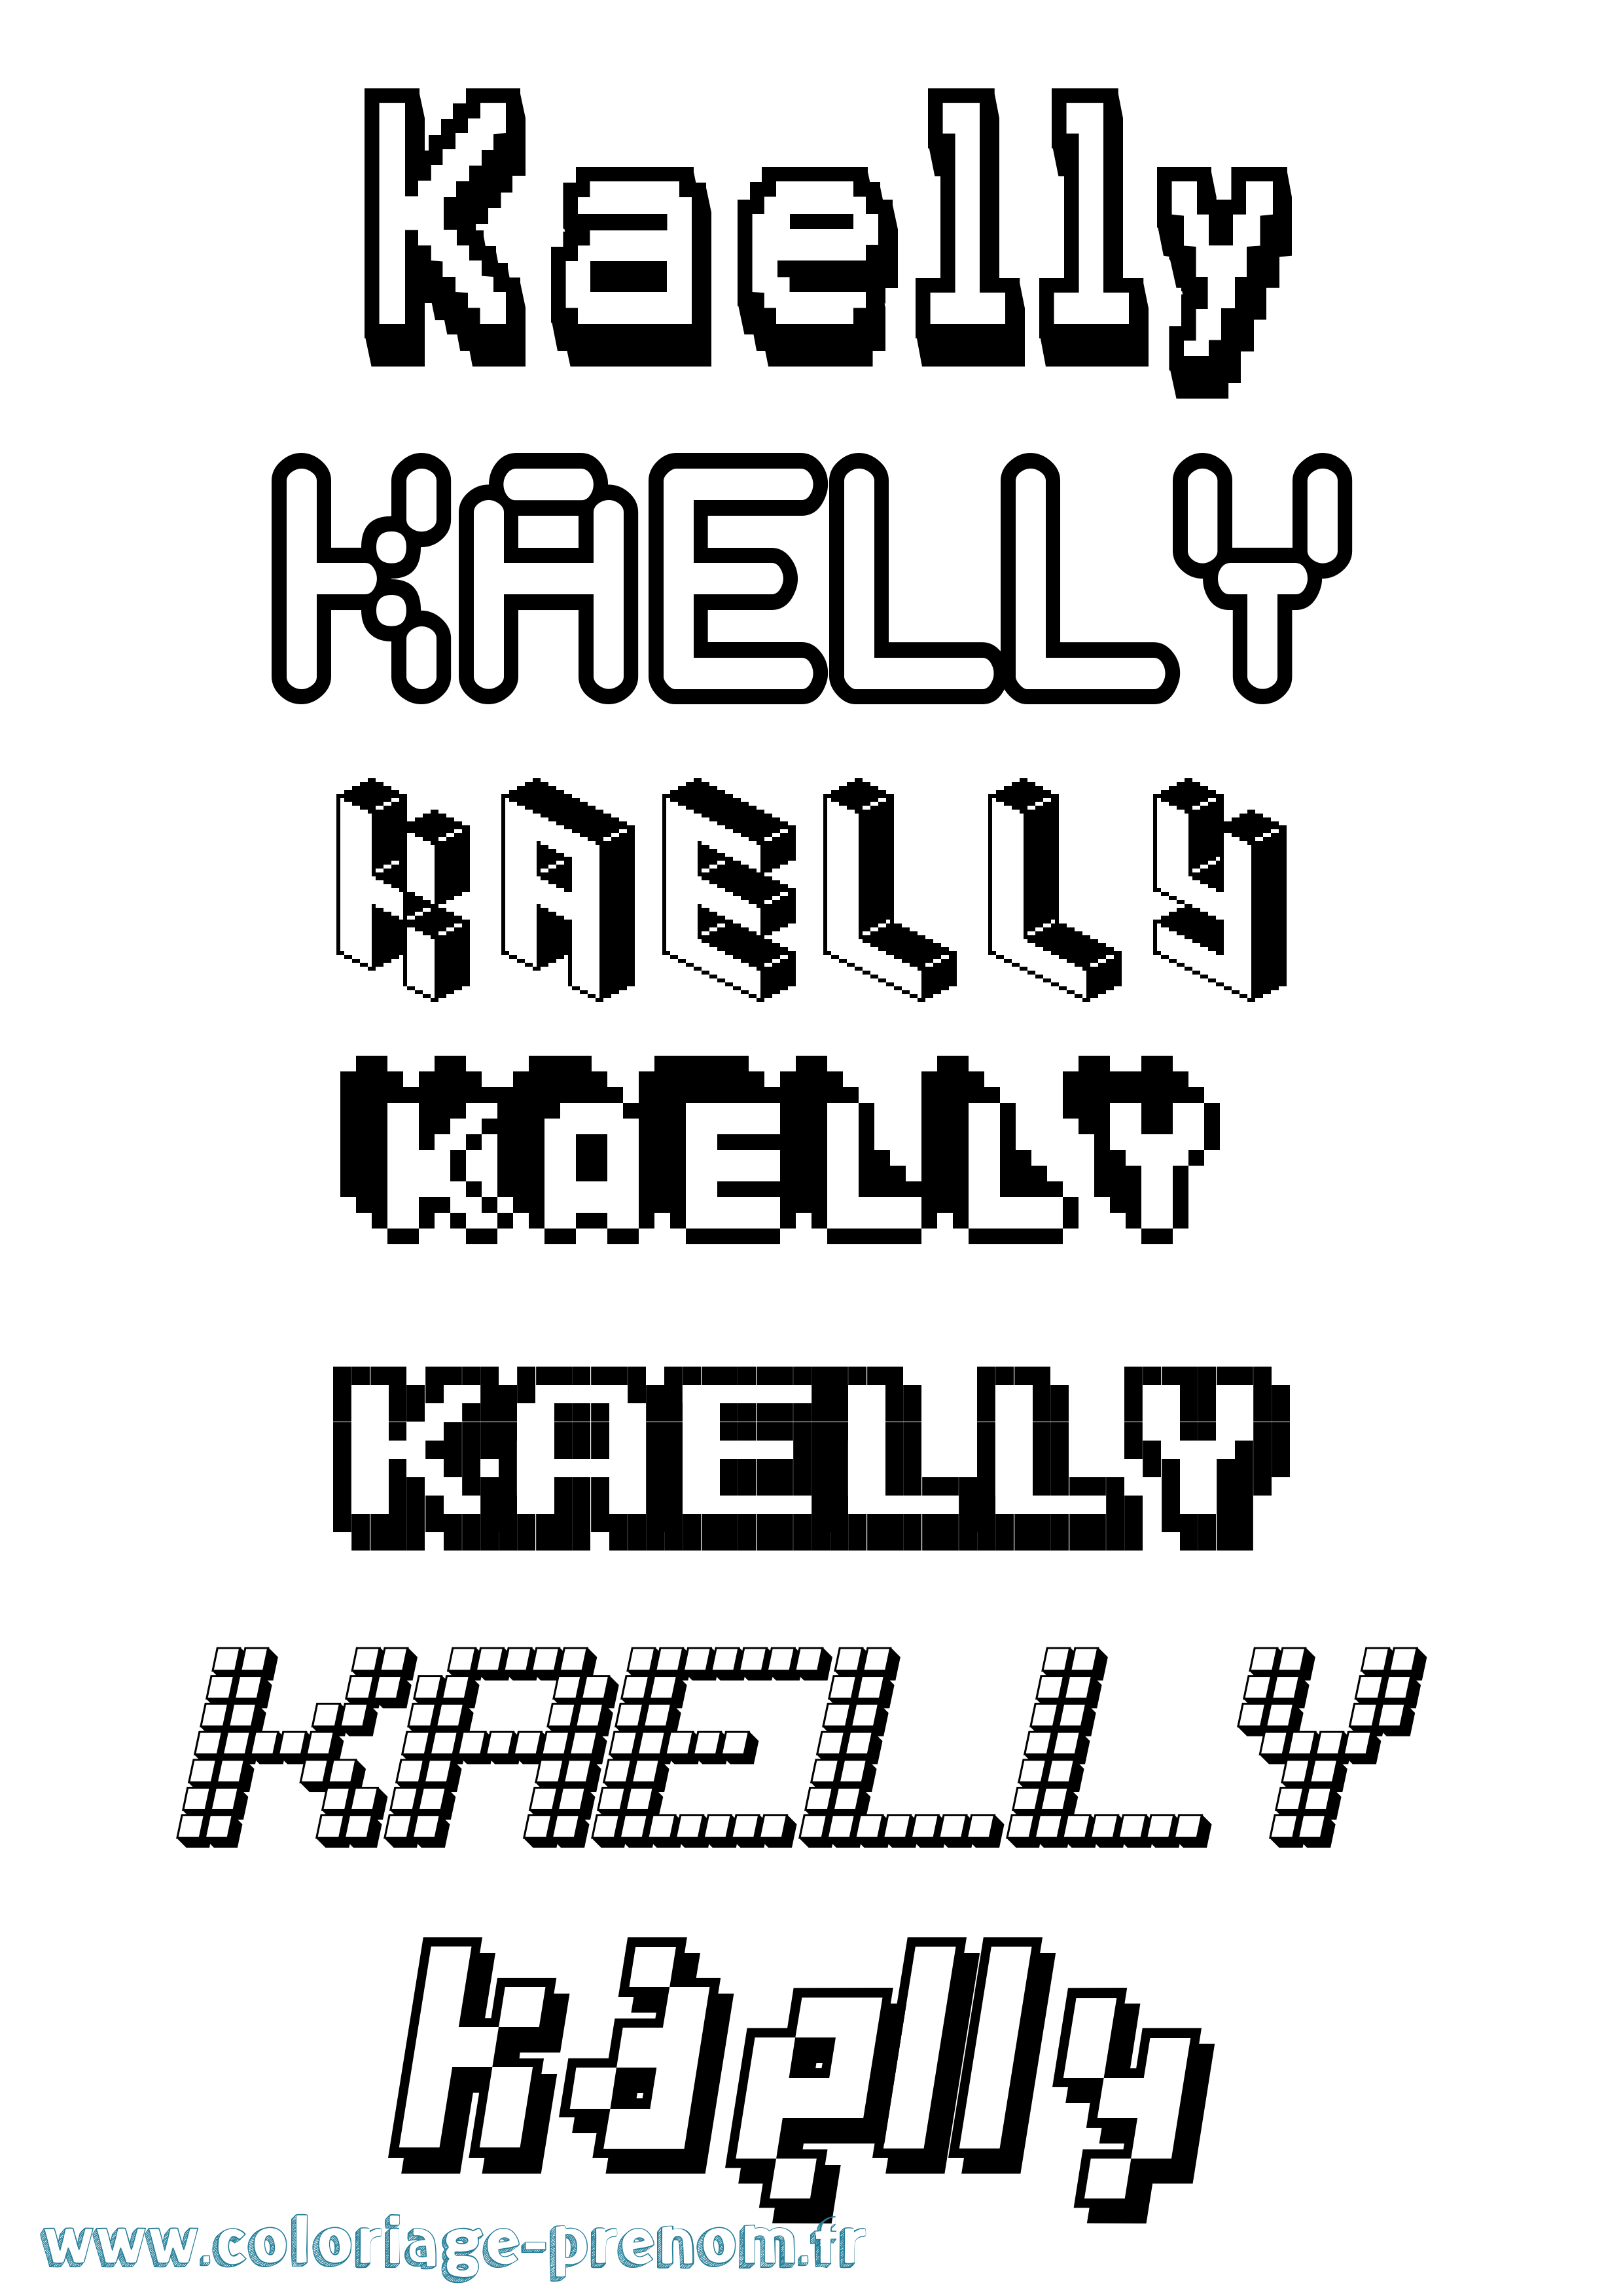 Coloriage prénom Kaelly Pixel